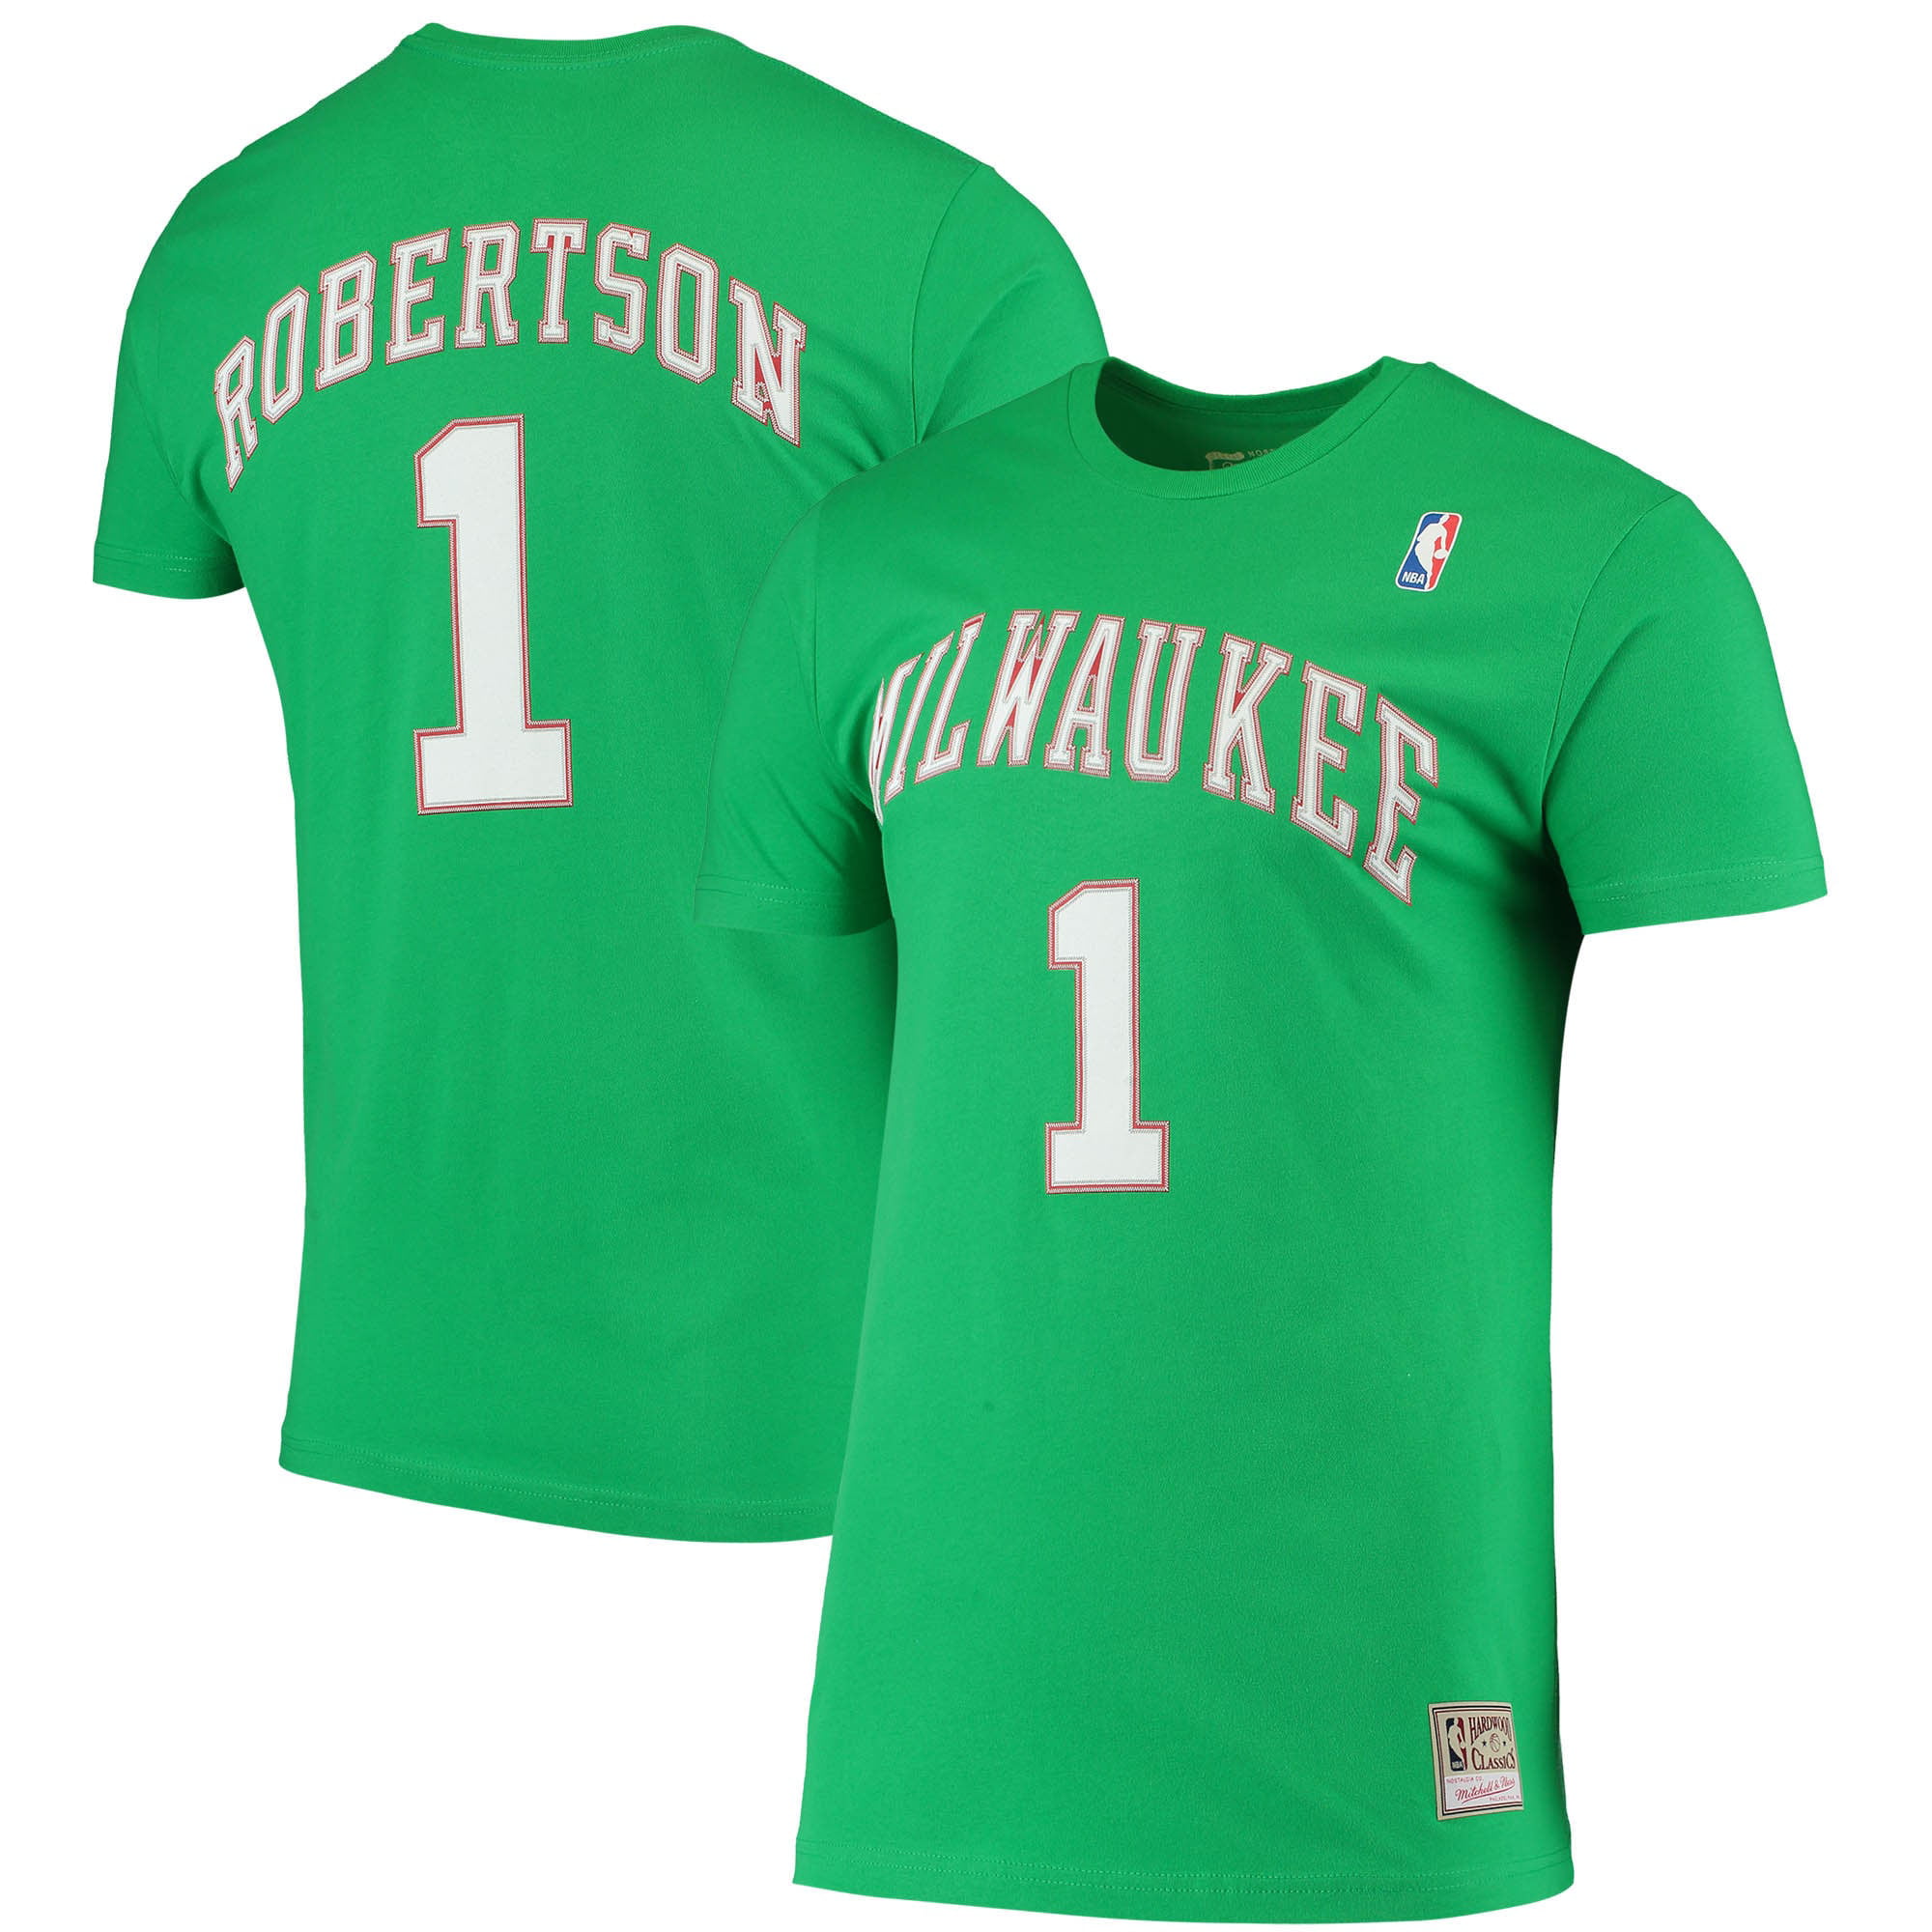 robertson shirt number